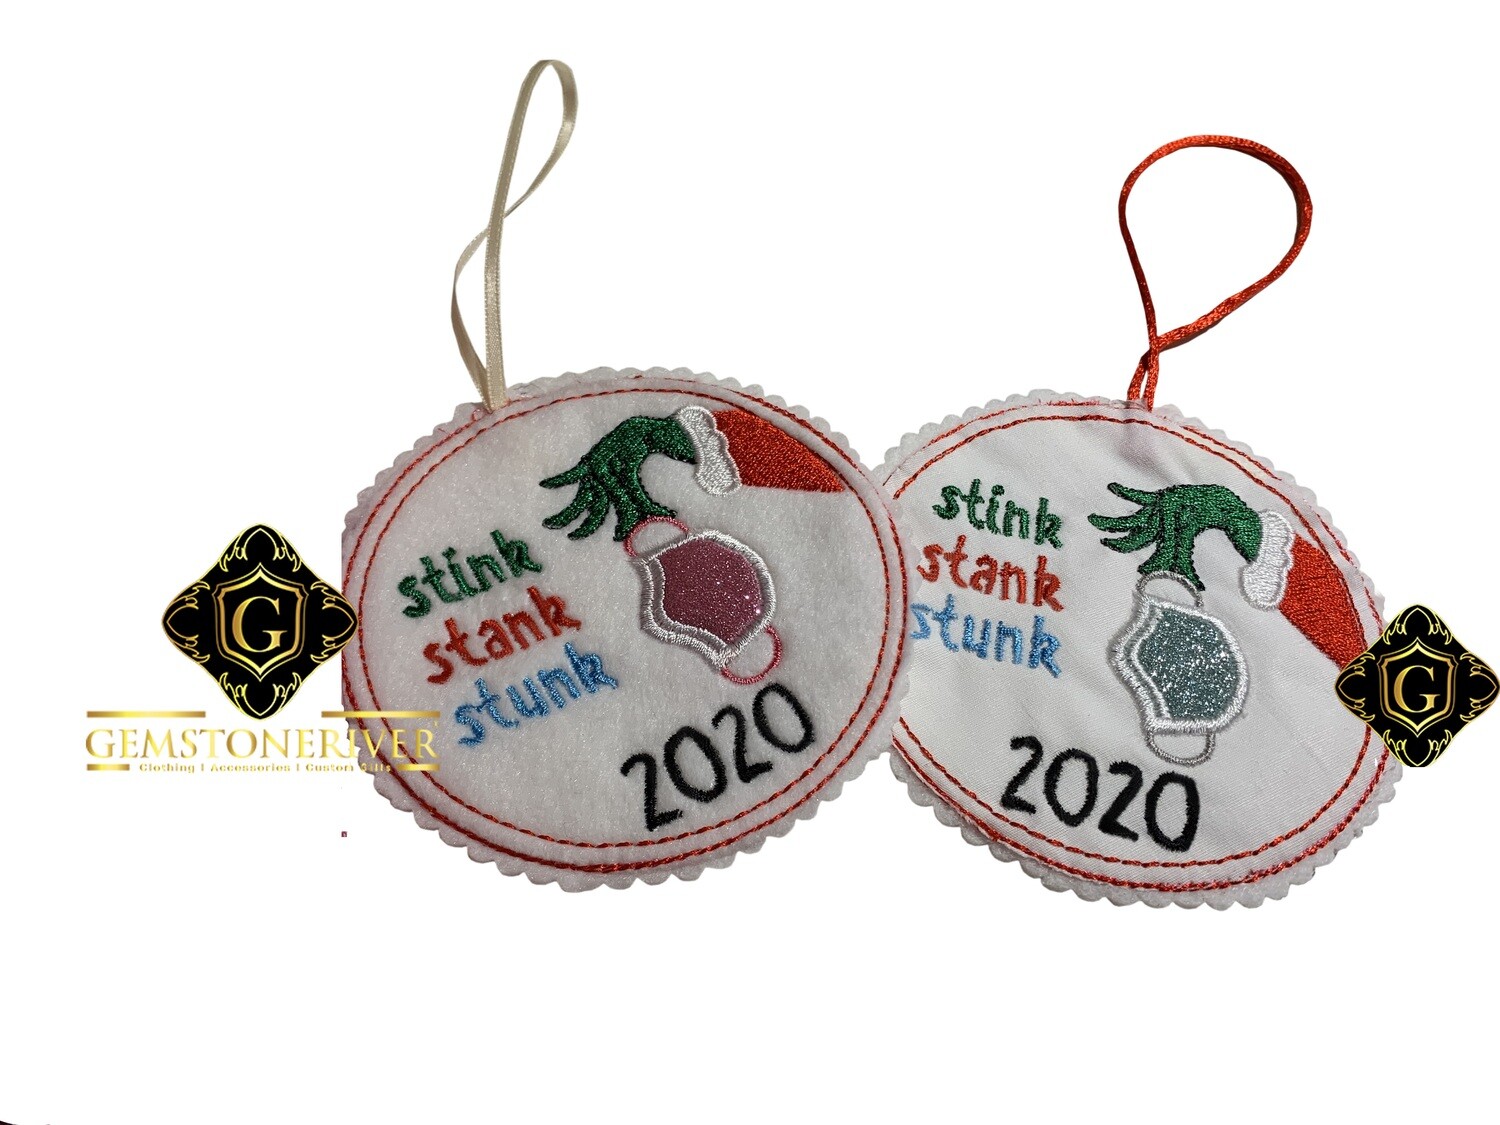 2020 Christmas stink stank stunk memento tree hanging ornament coaster wall gift decoration